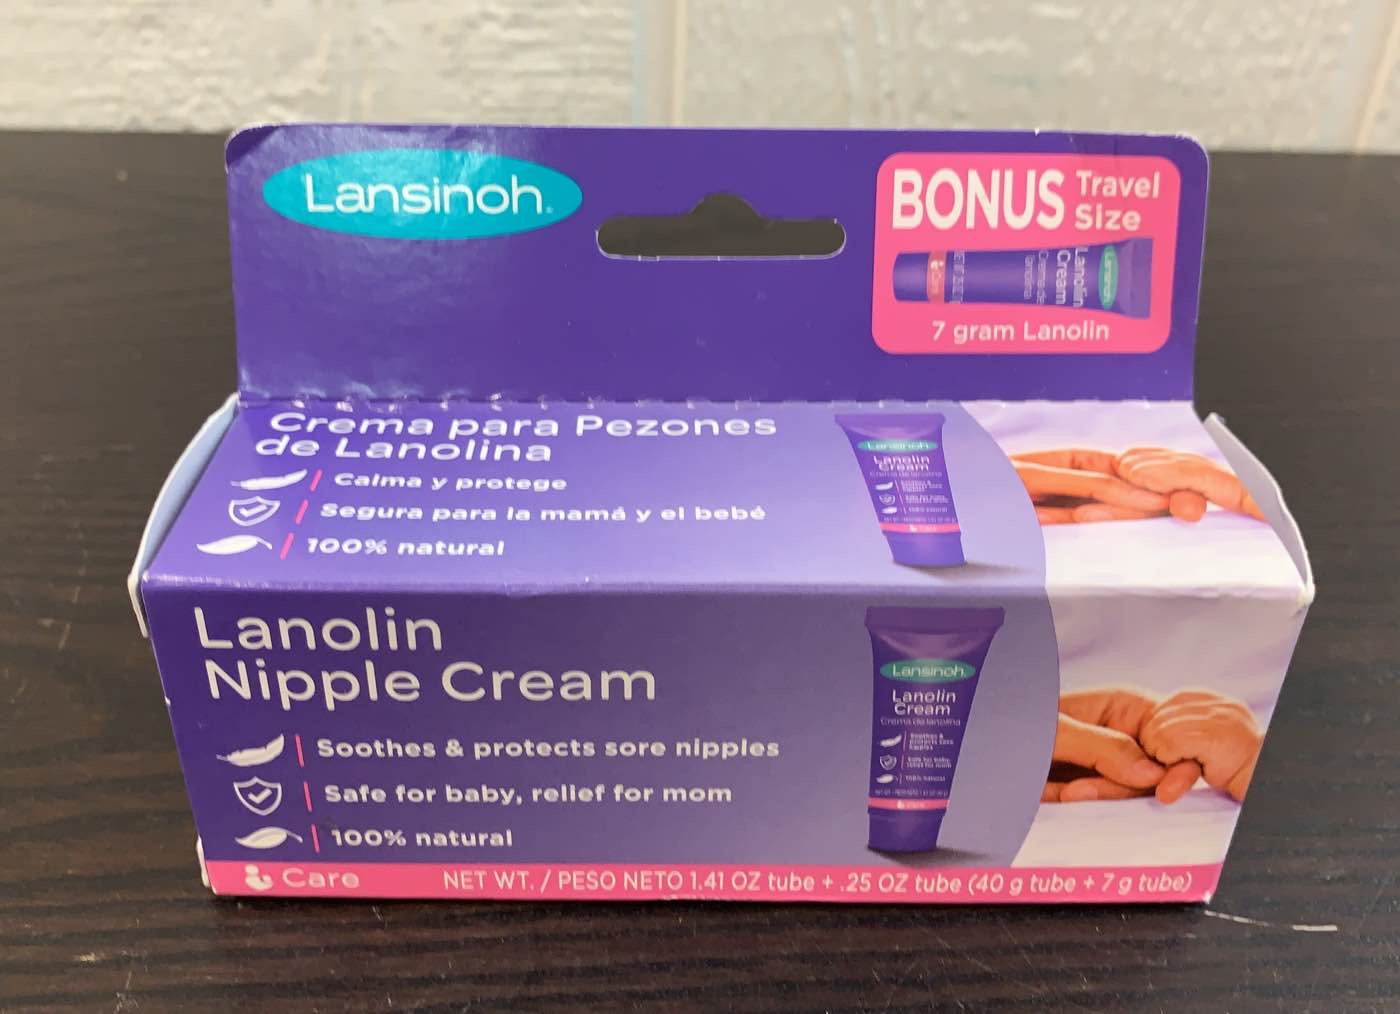 Lansinoh Lanolin Nipple Cream, 1.41 Ounces each (Value Pack of 4)